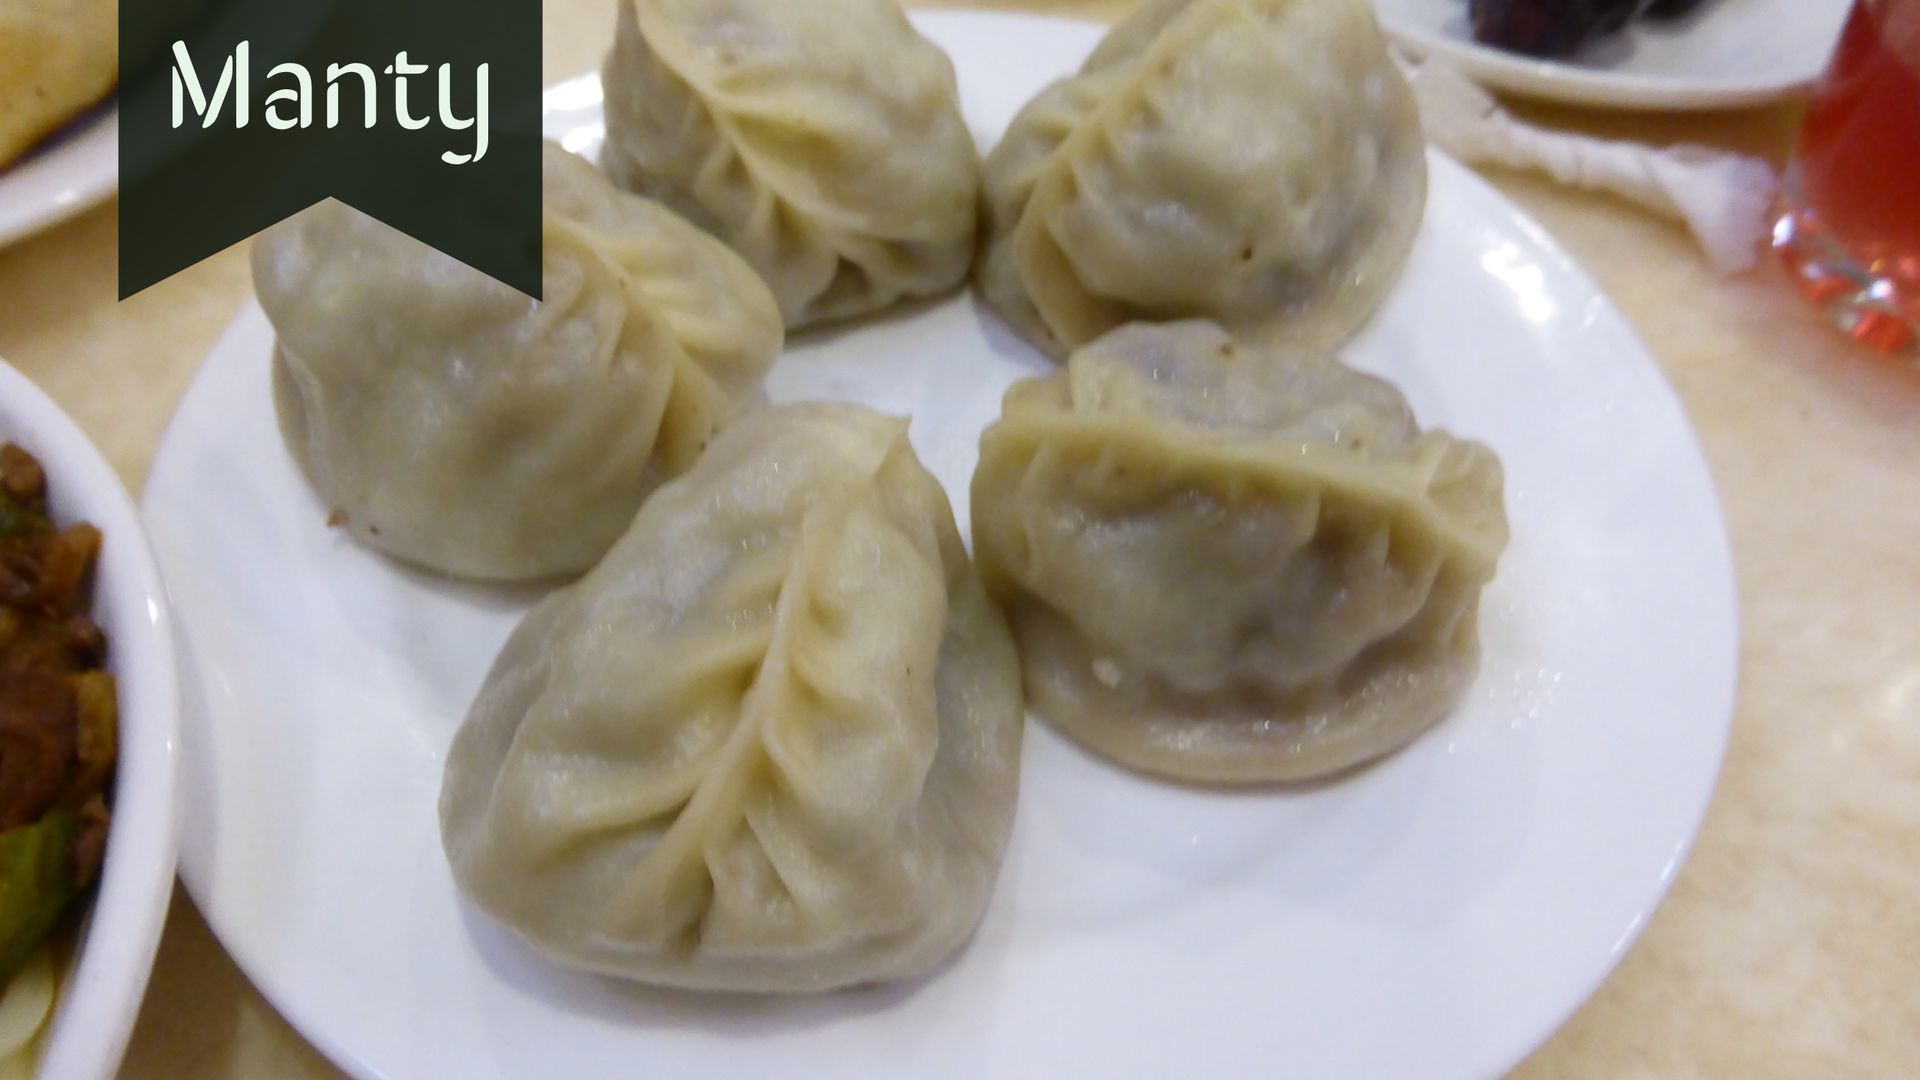 Manty central Asian food, dumplings